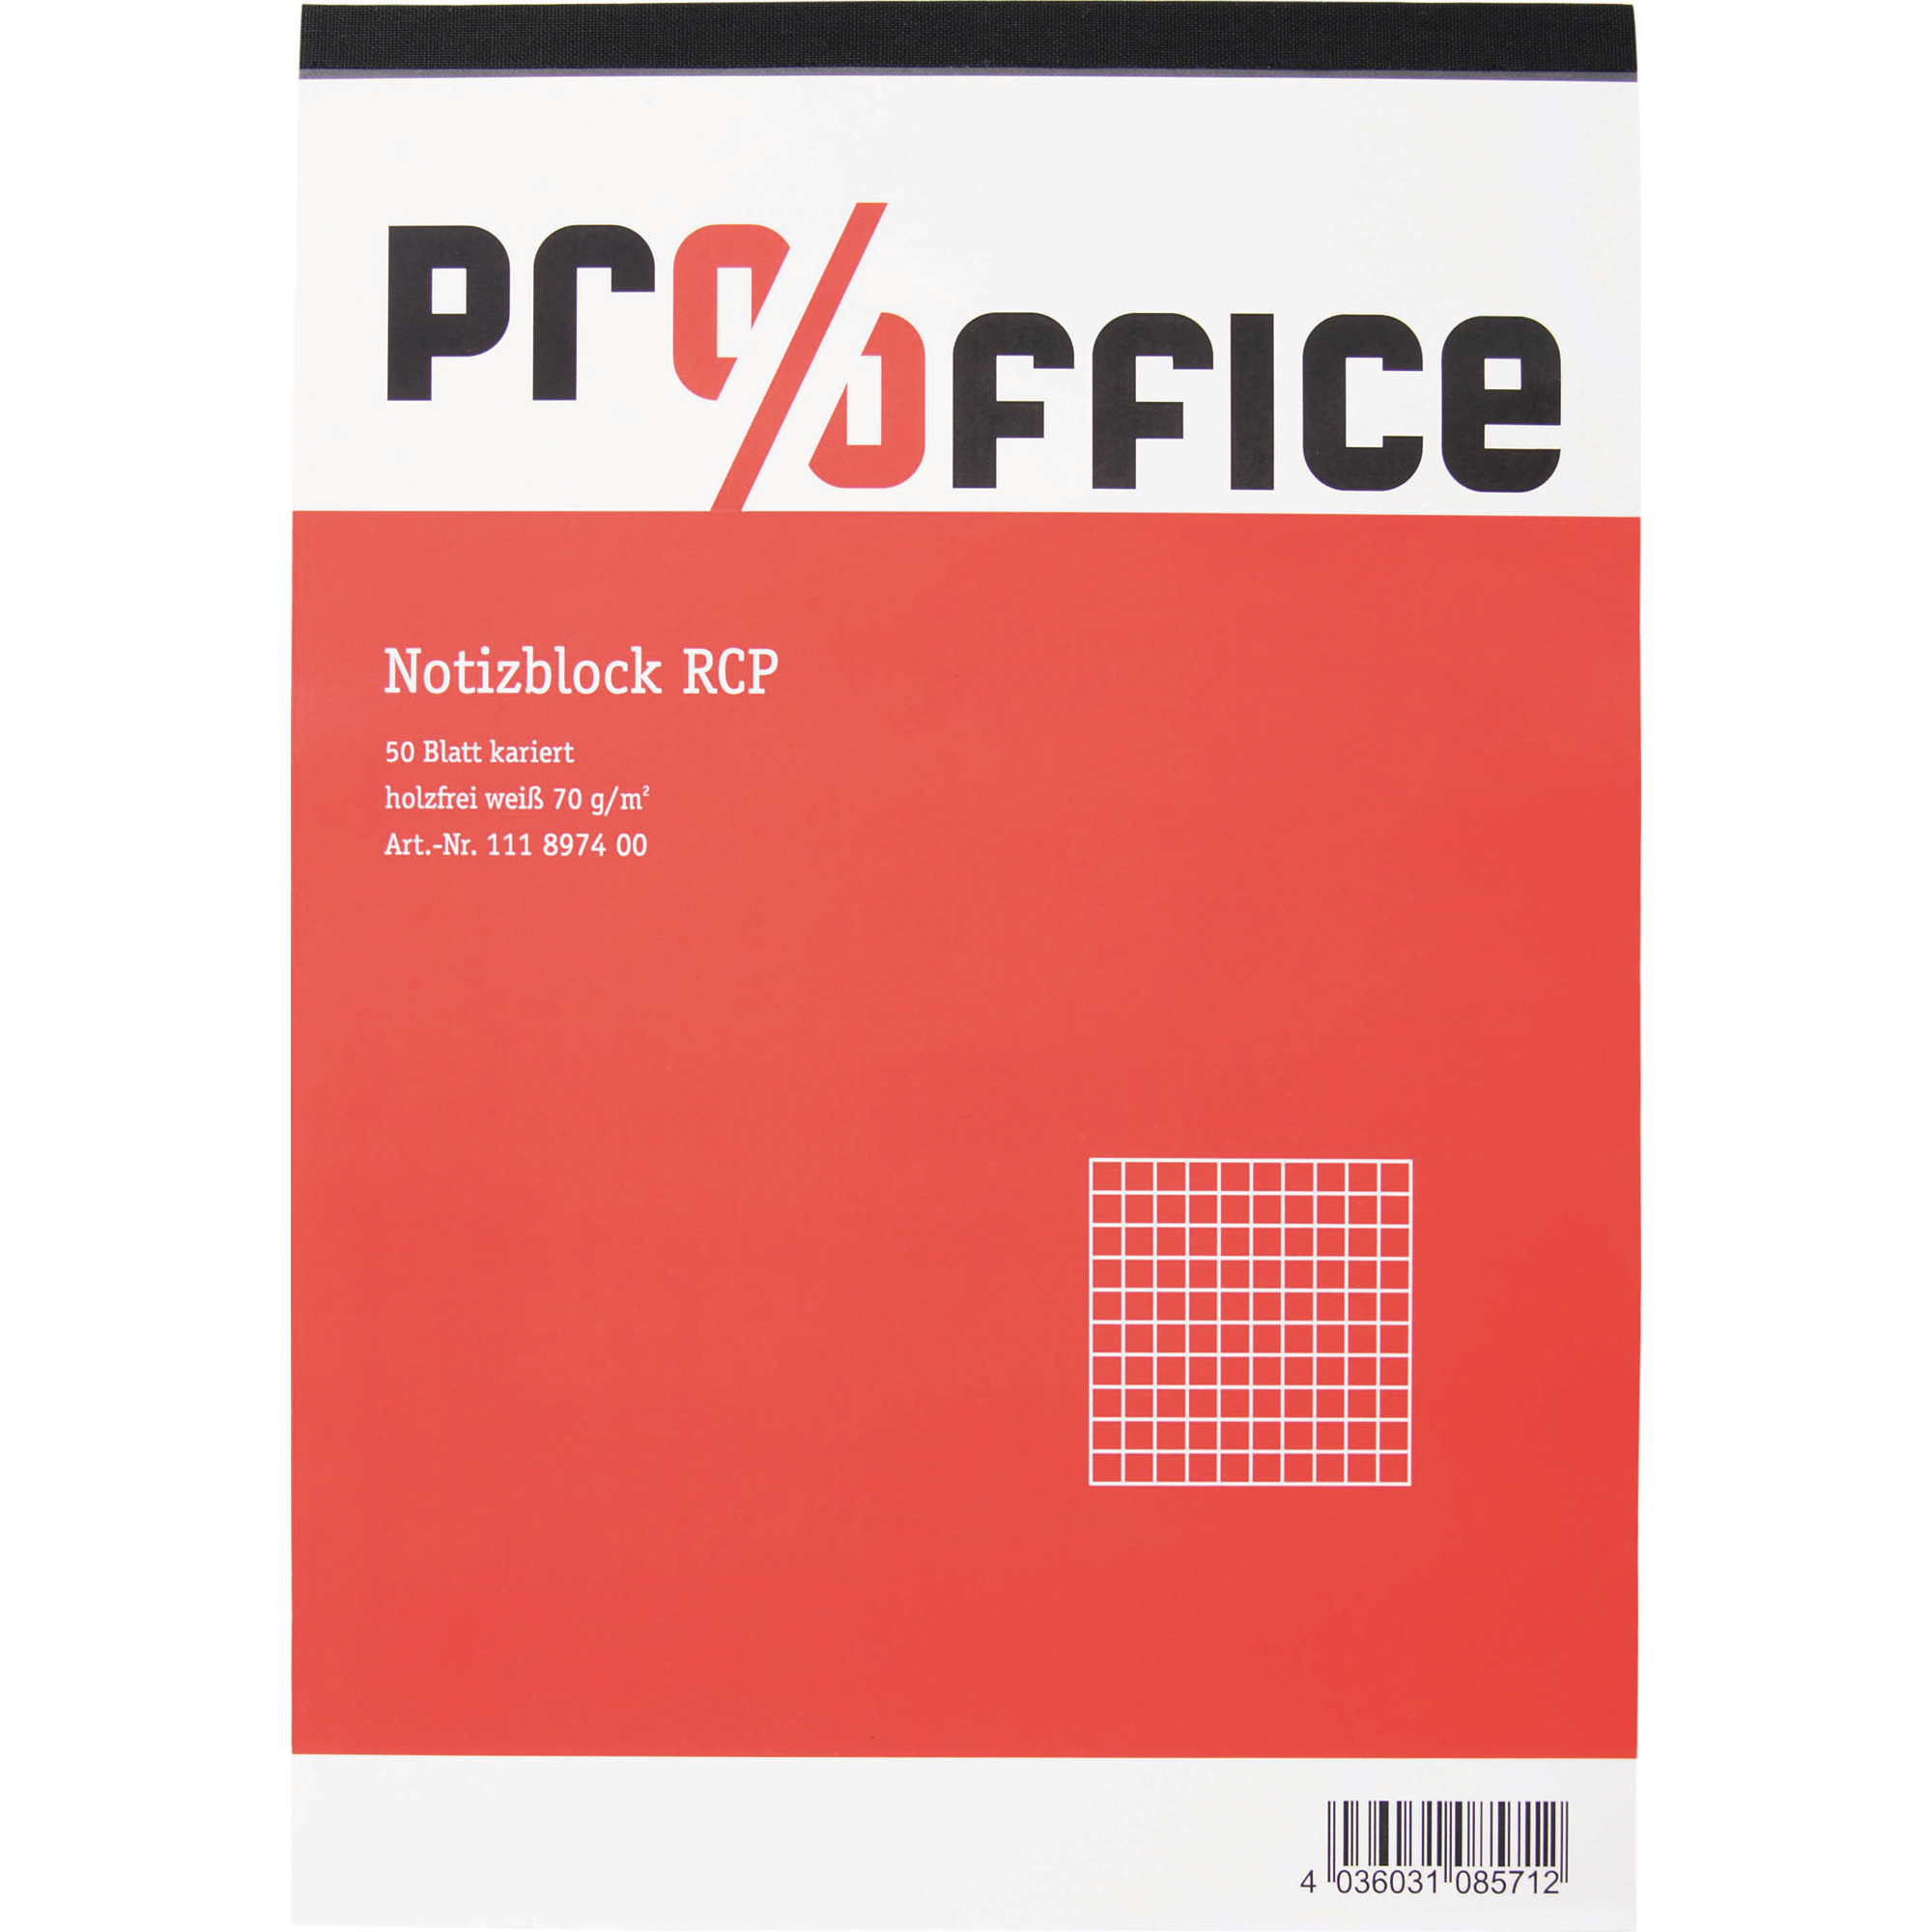 Pro/Office Notizblock Recycling DIN A4